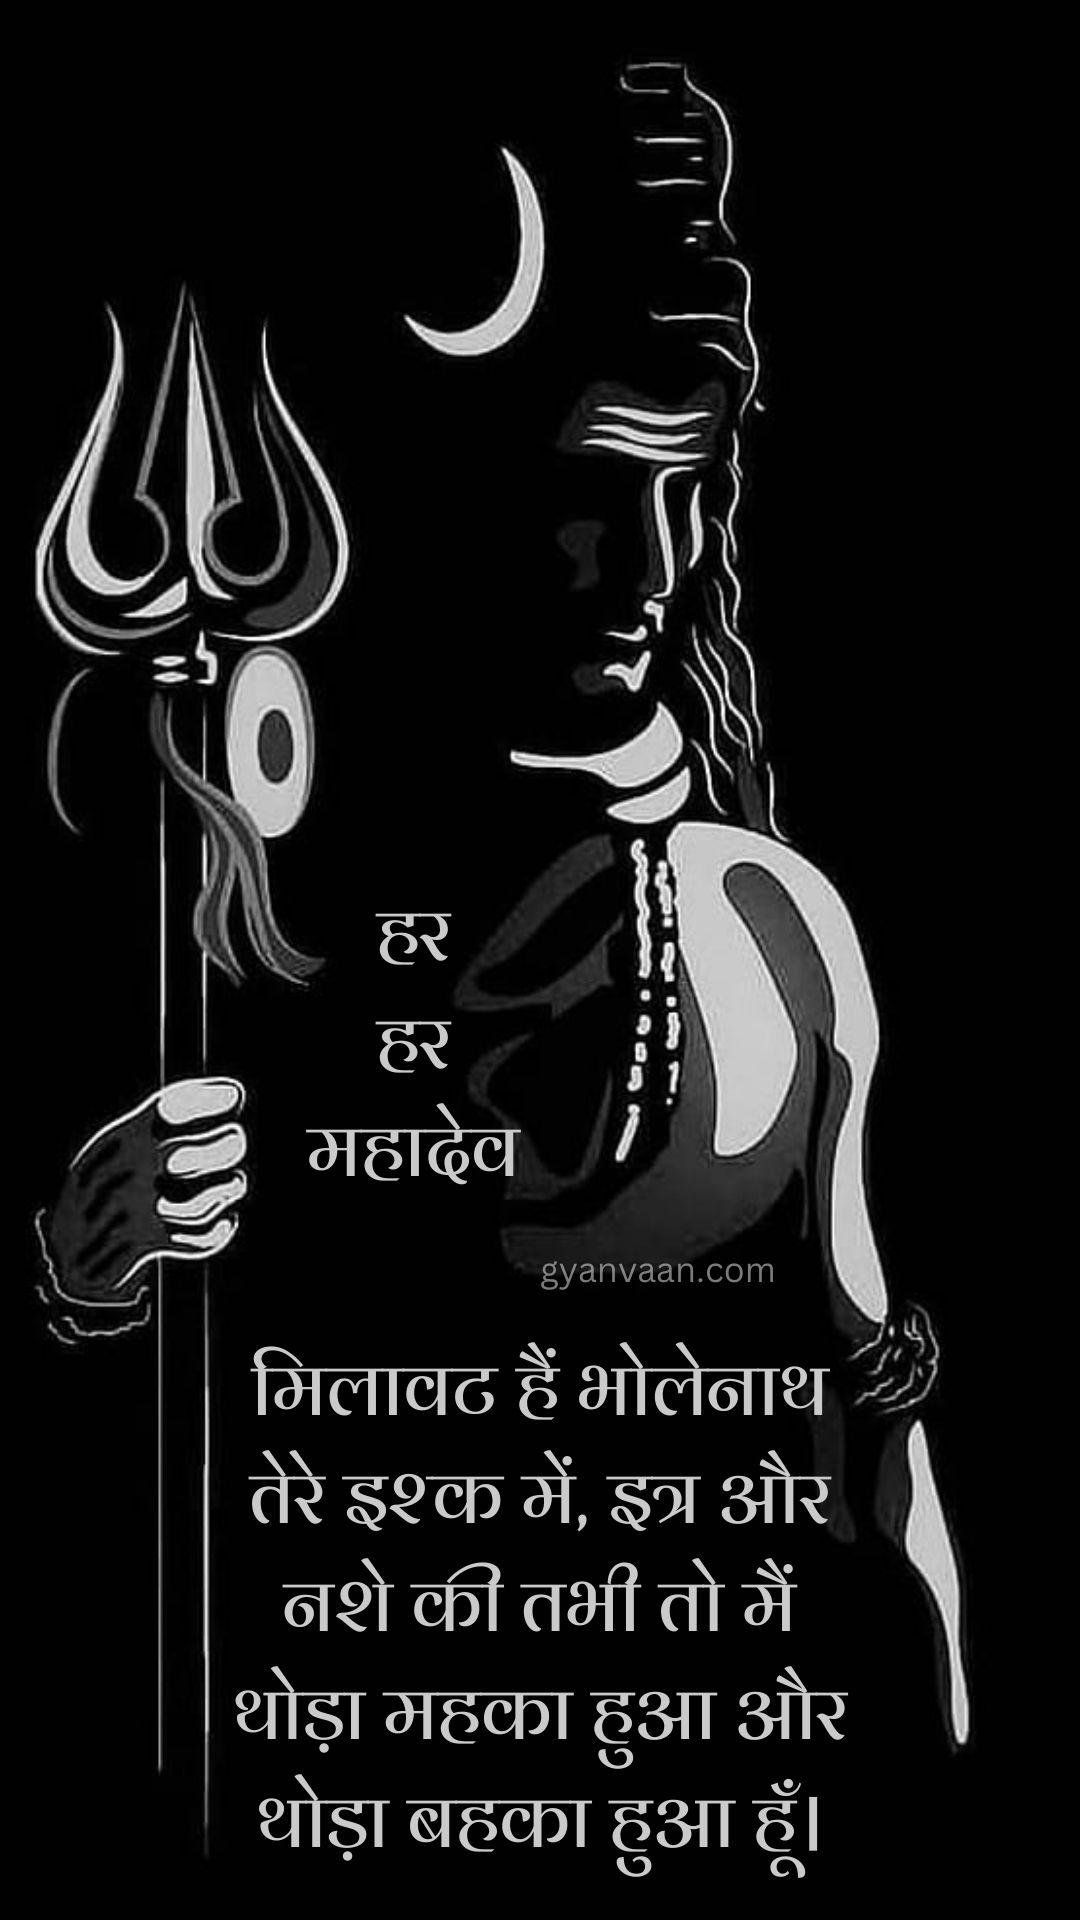 Lord Shiva Mahadev Quotes And Mahakal Status In Hindi For Mobile 27 - Shiva Quotes